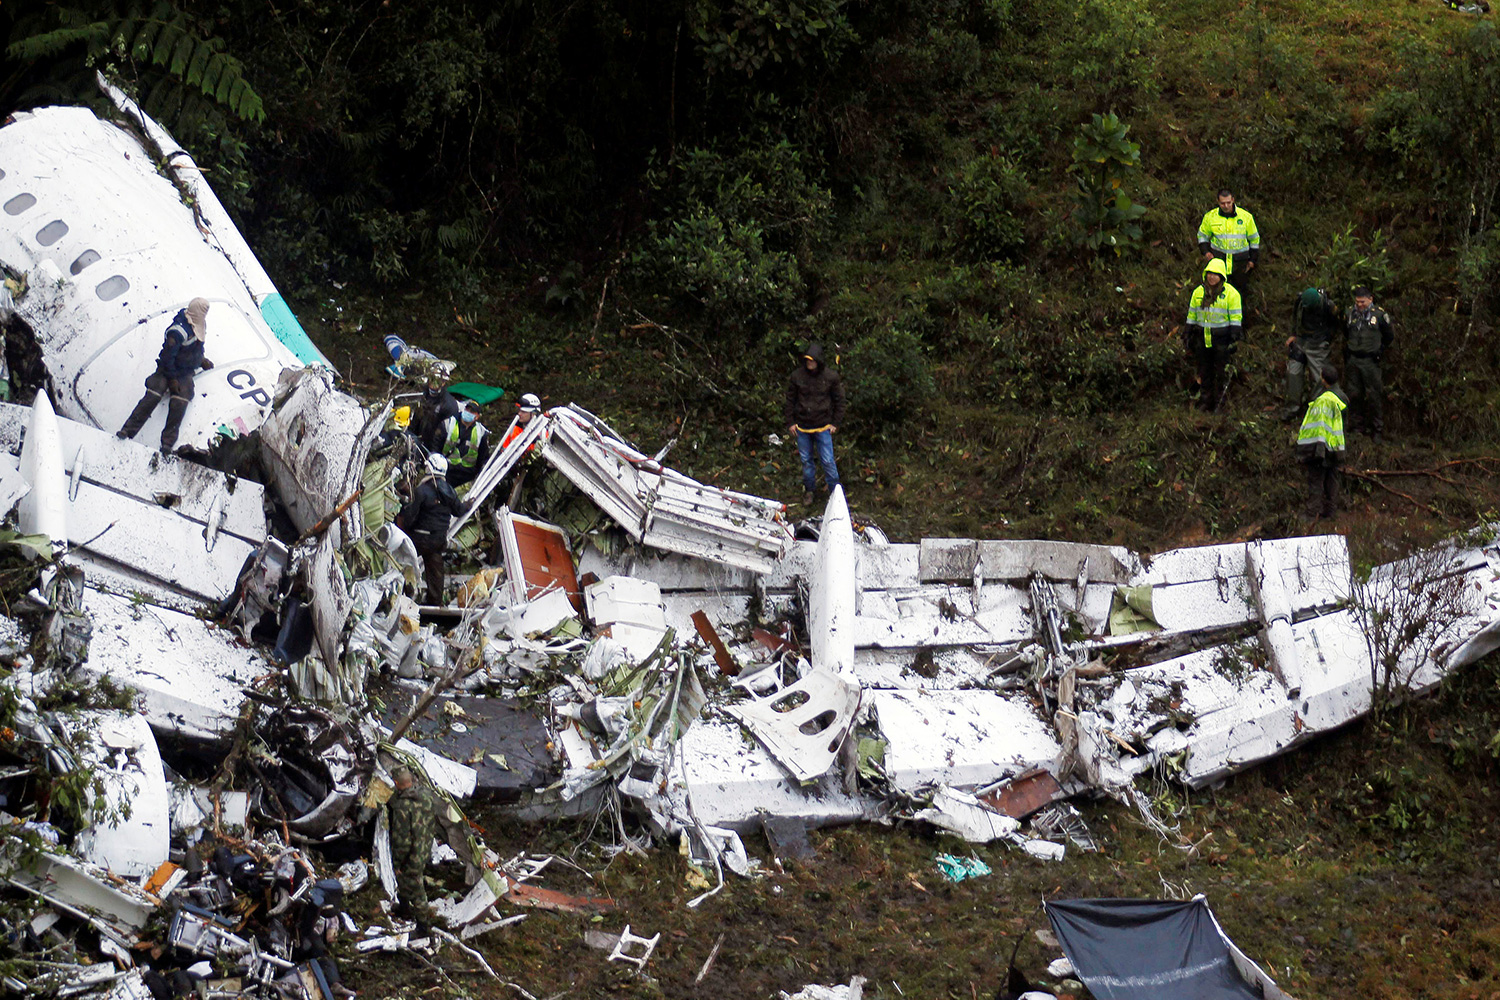 El piloto del avión del Chapecoense alertó de la falta de combustible antes de estrellarse